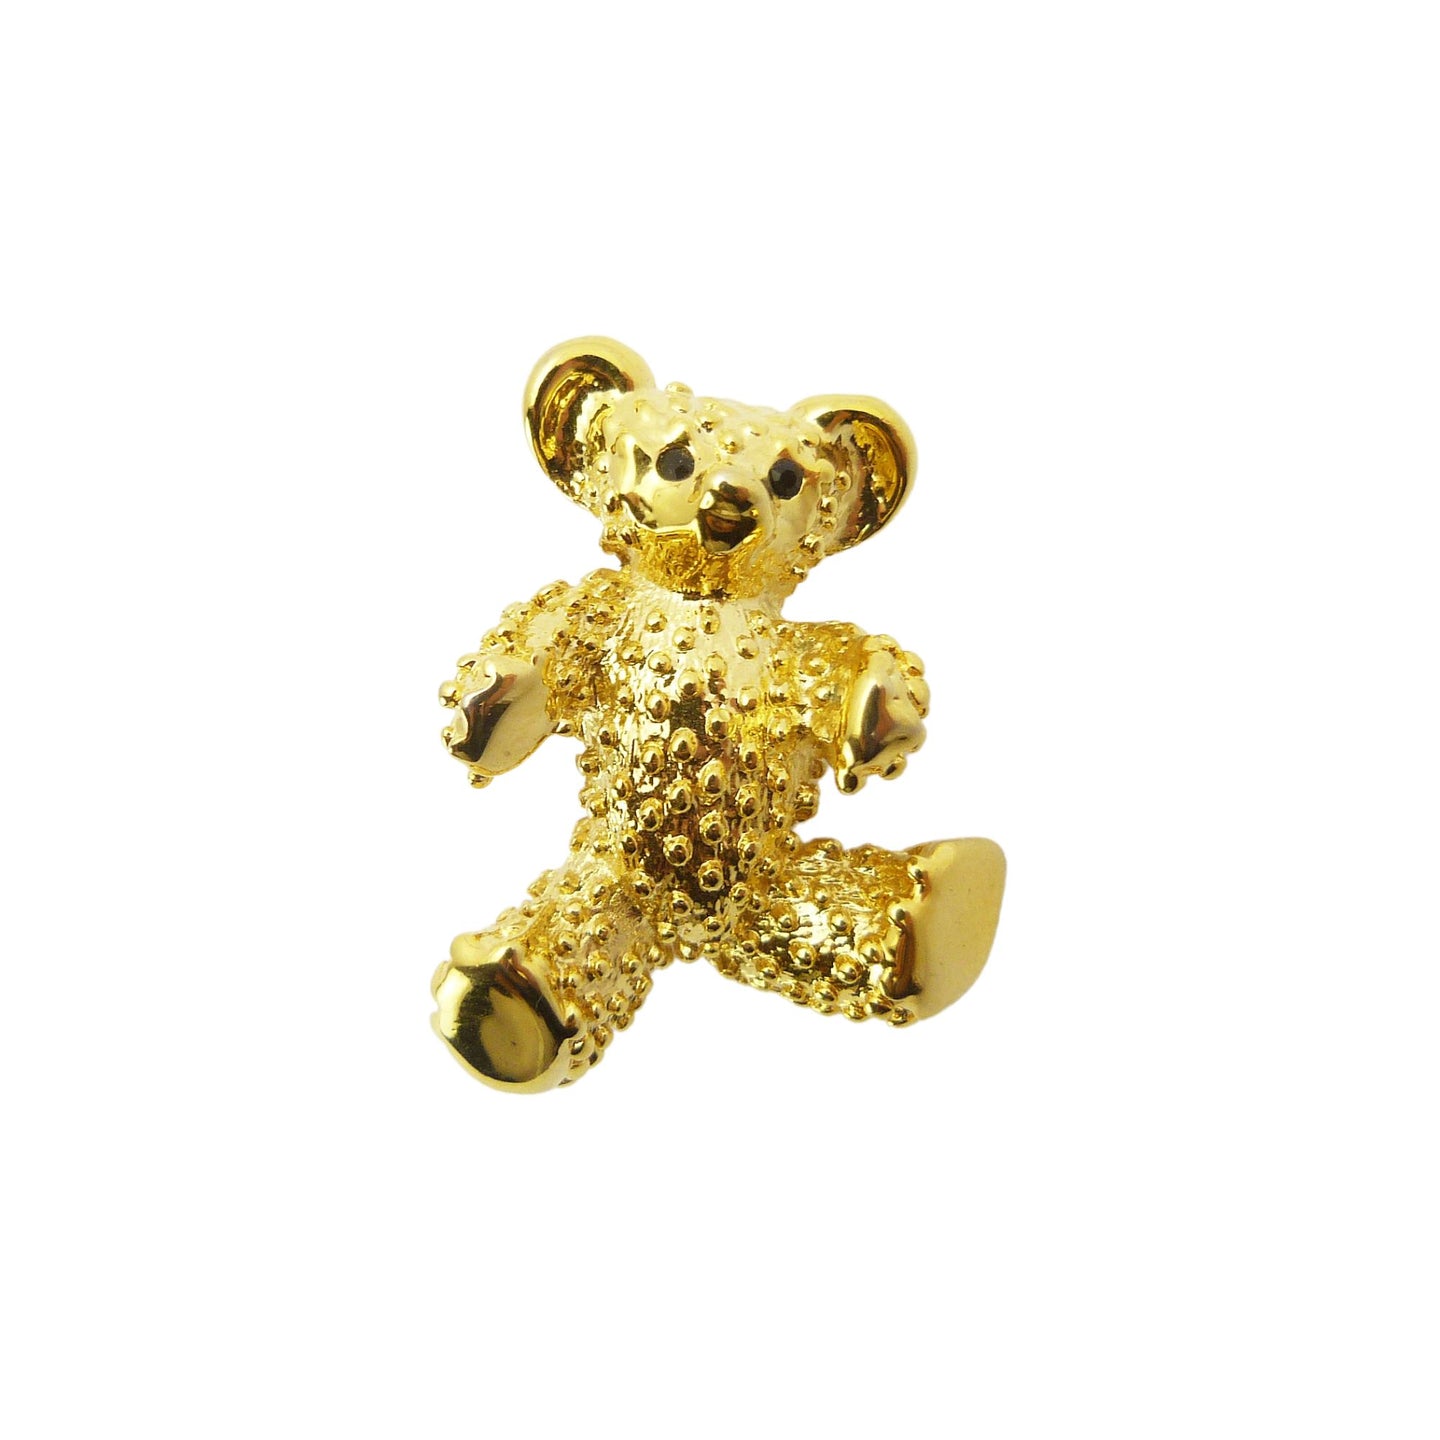 Vintage Gold Teddy Bear Brooch